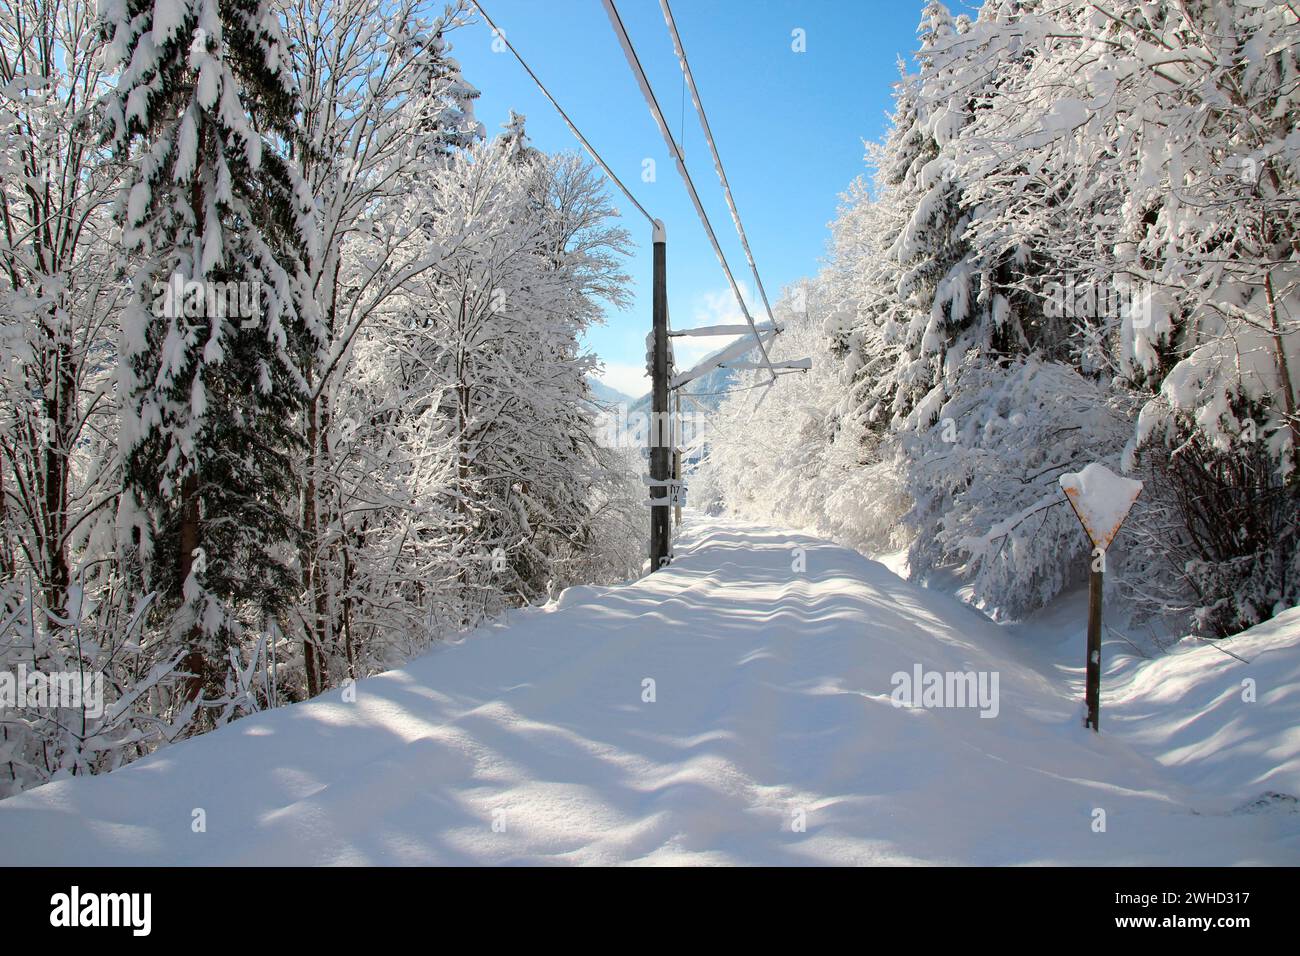 Binari ferroviari masse di neve non sgombre sulla linea Mittenwald-Garmisch-Partenkirchen, Terra di Werdenfelser, alta Baviera, Baviera, Germania meridionale, G Foto Stock